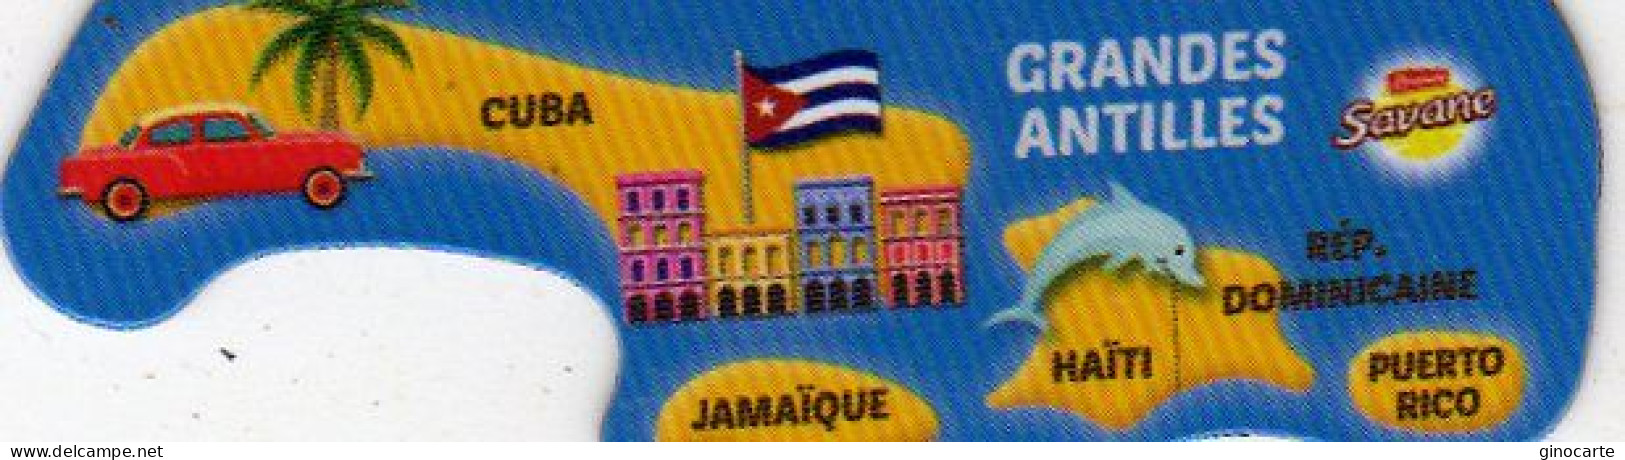 Magnets Magnet Brossard Savane Continent Amerique Grandes Antilles - Turismo